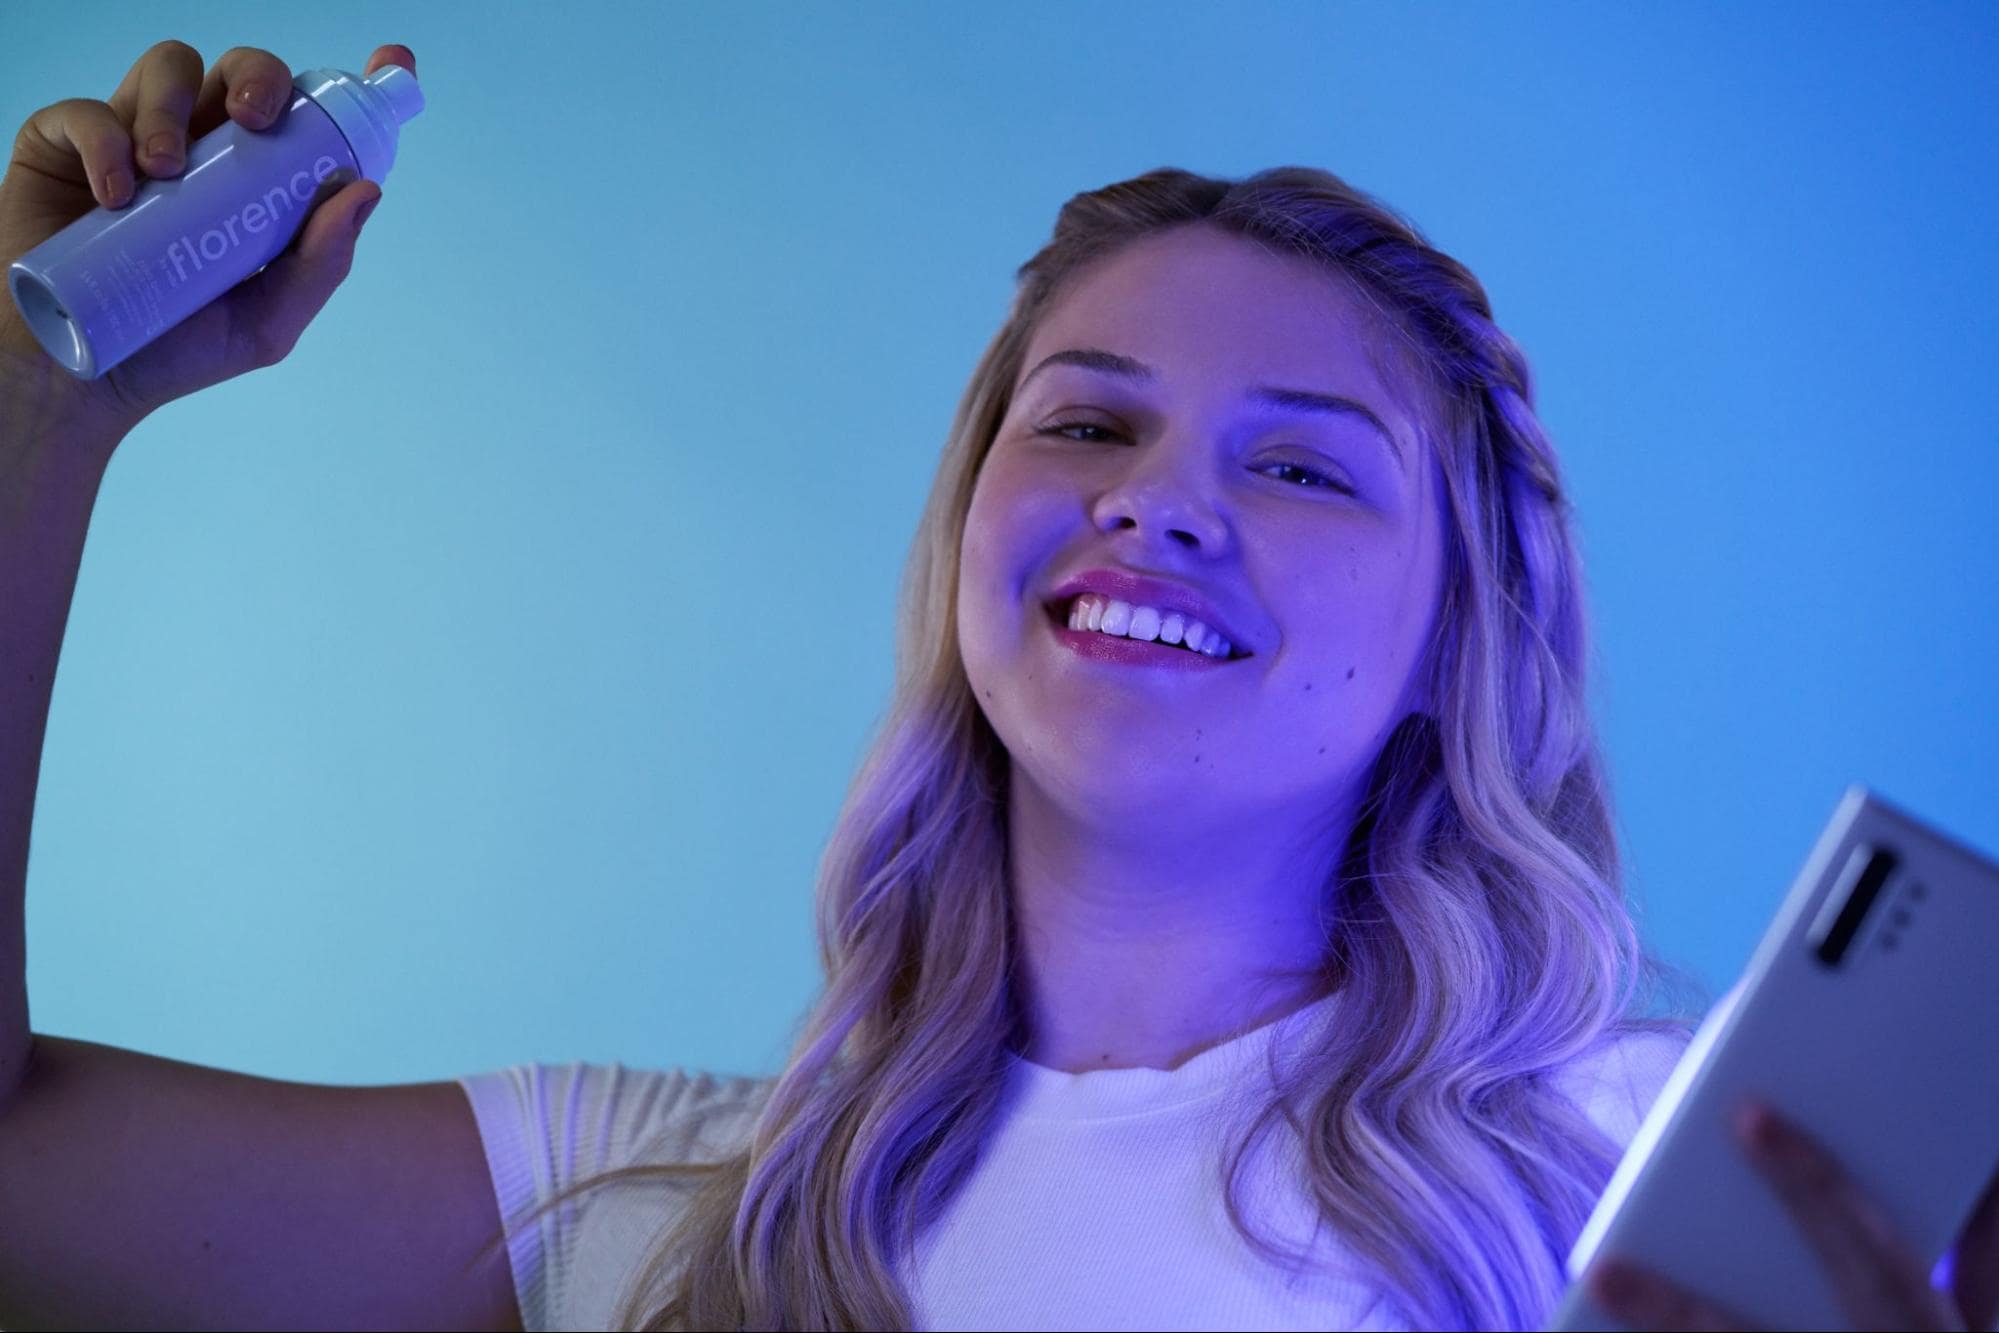 fbm model holding setting spray and phone under blue light